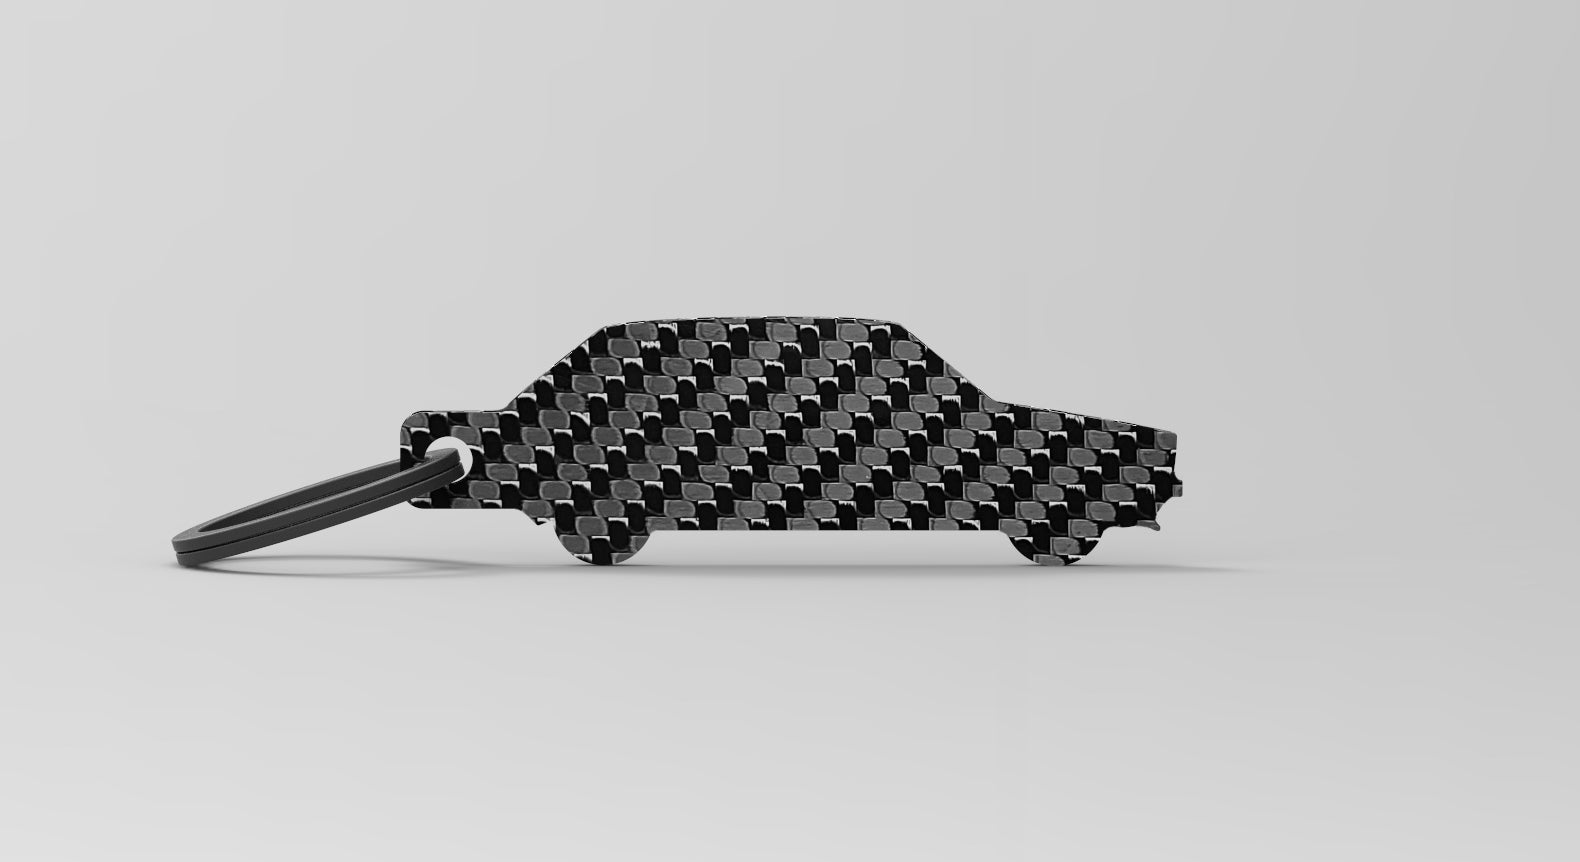 Golf (MK1) silhouette carbon fiber keychain 